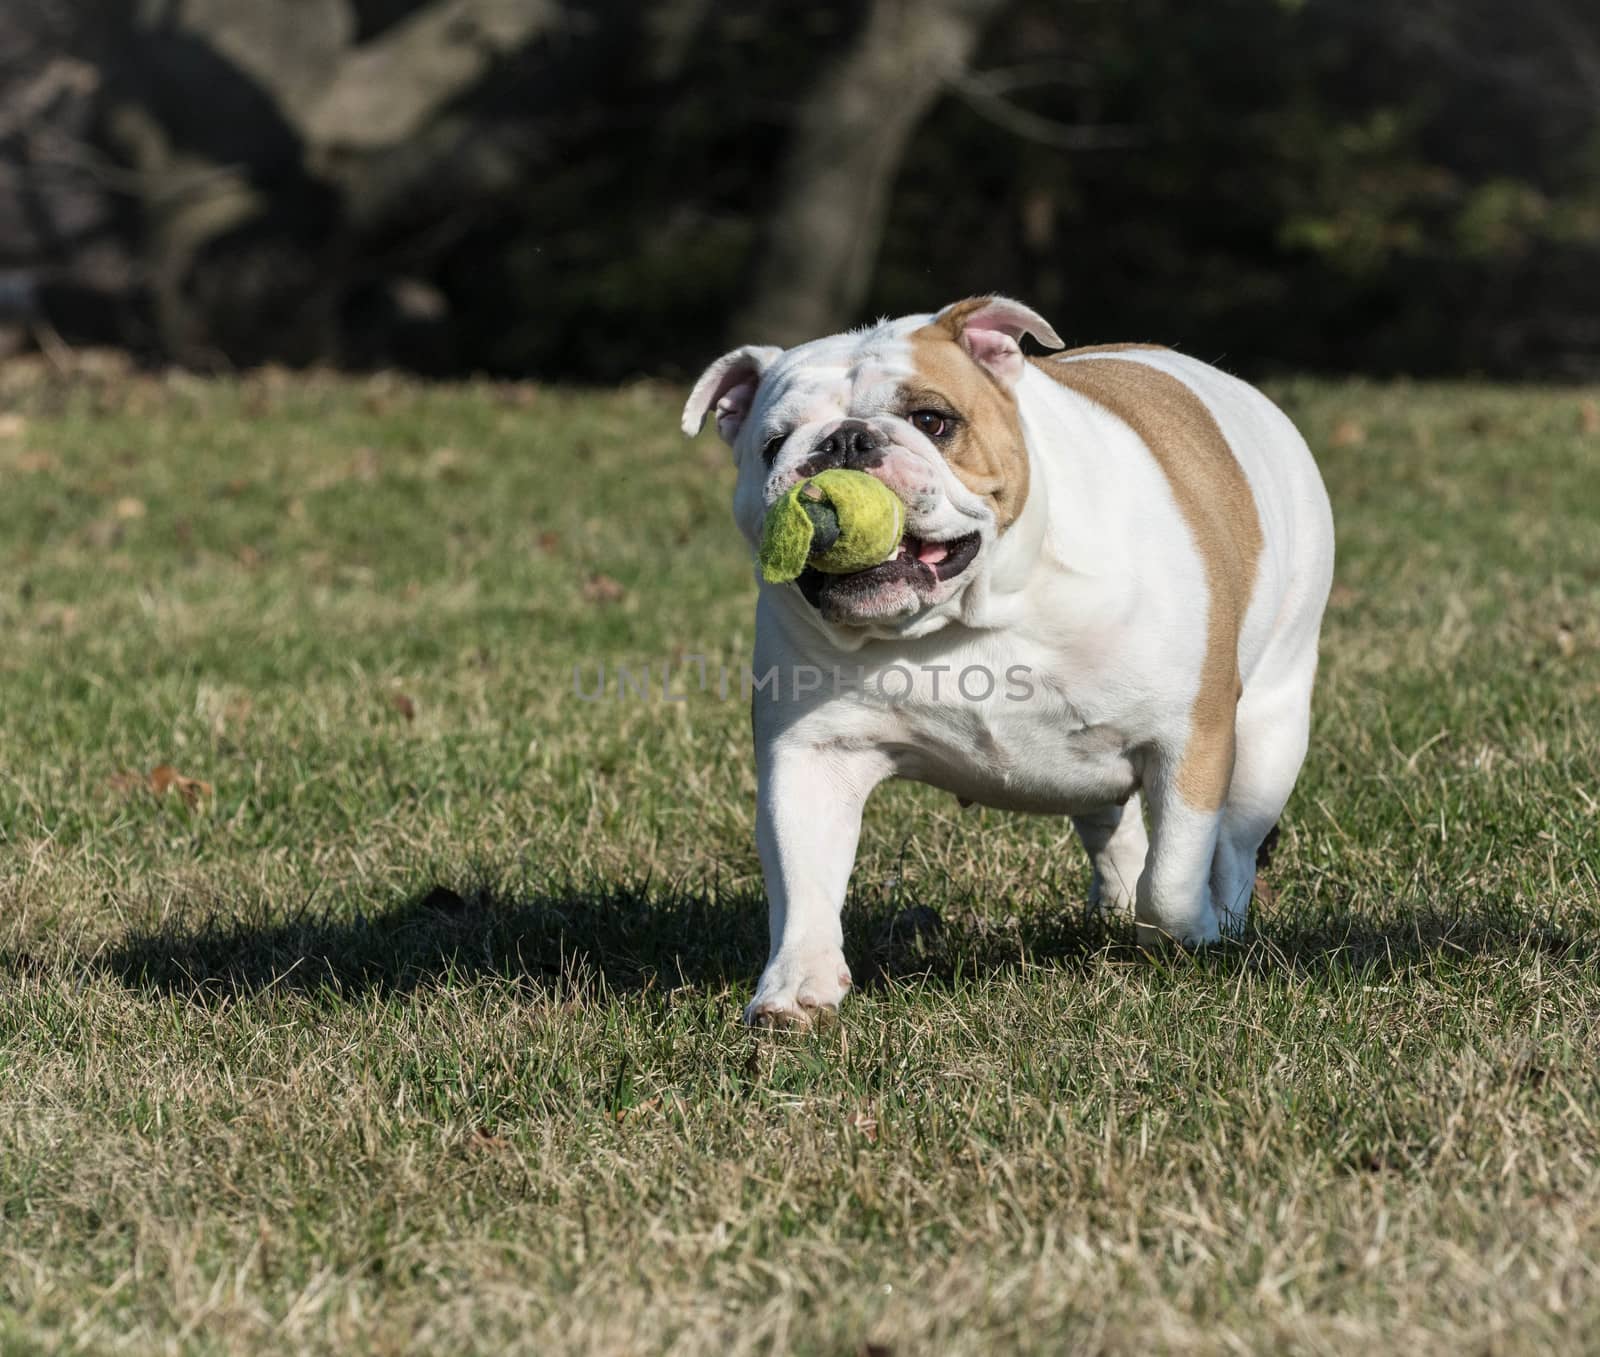 english bulldog playing catch with a tennis ball